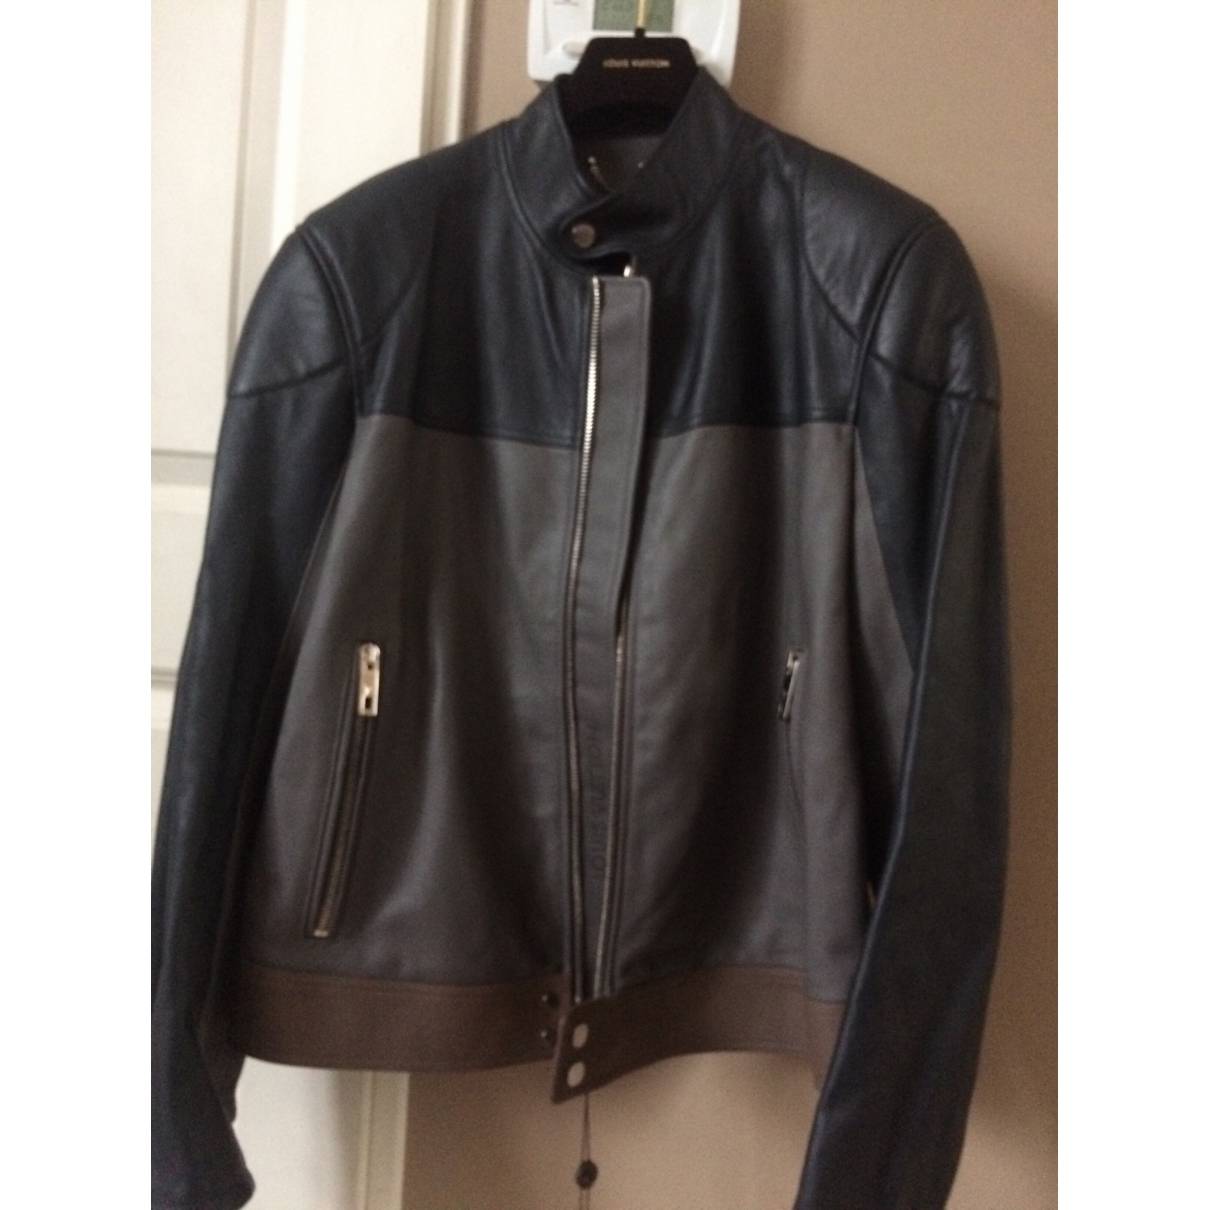 Louis Vuitton - Authenticated Jacket - Leather Plain for Men, Very Good Condition